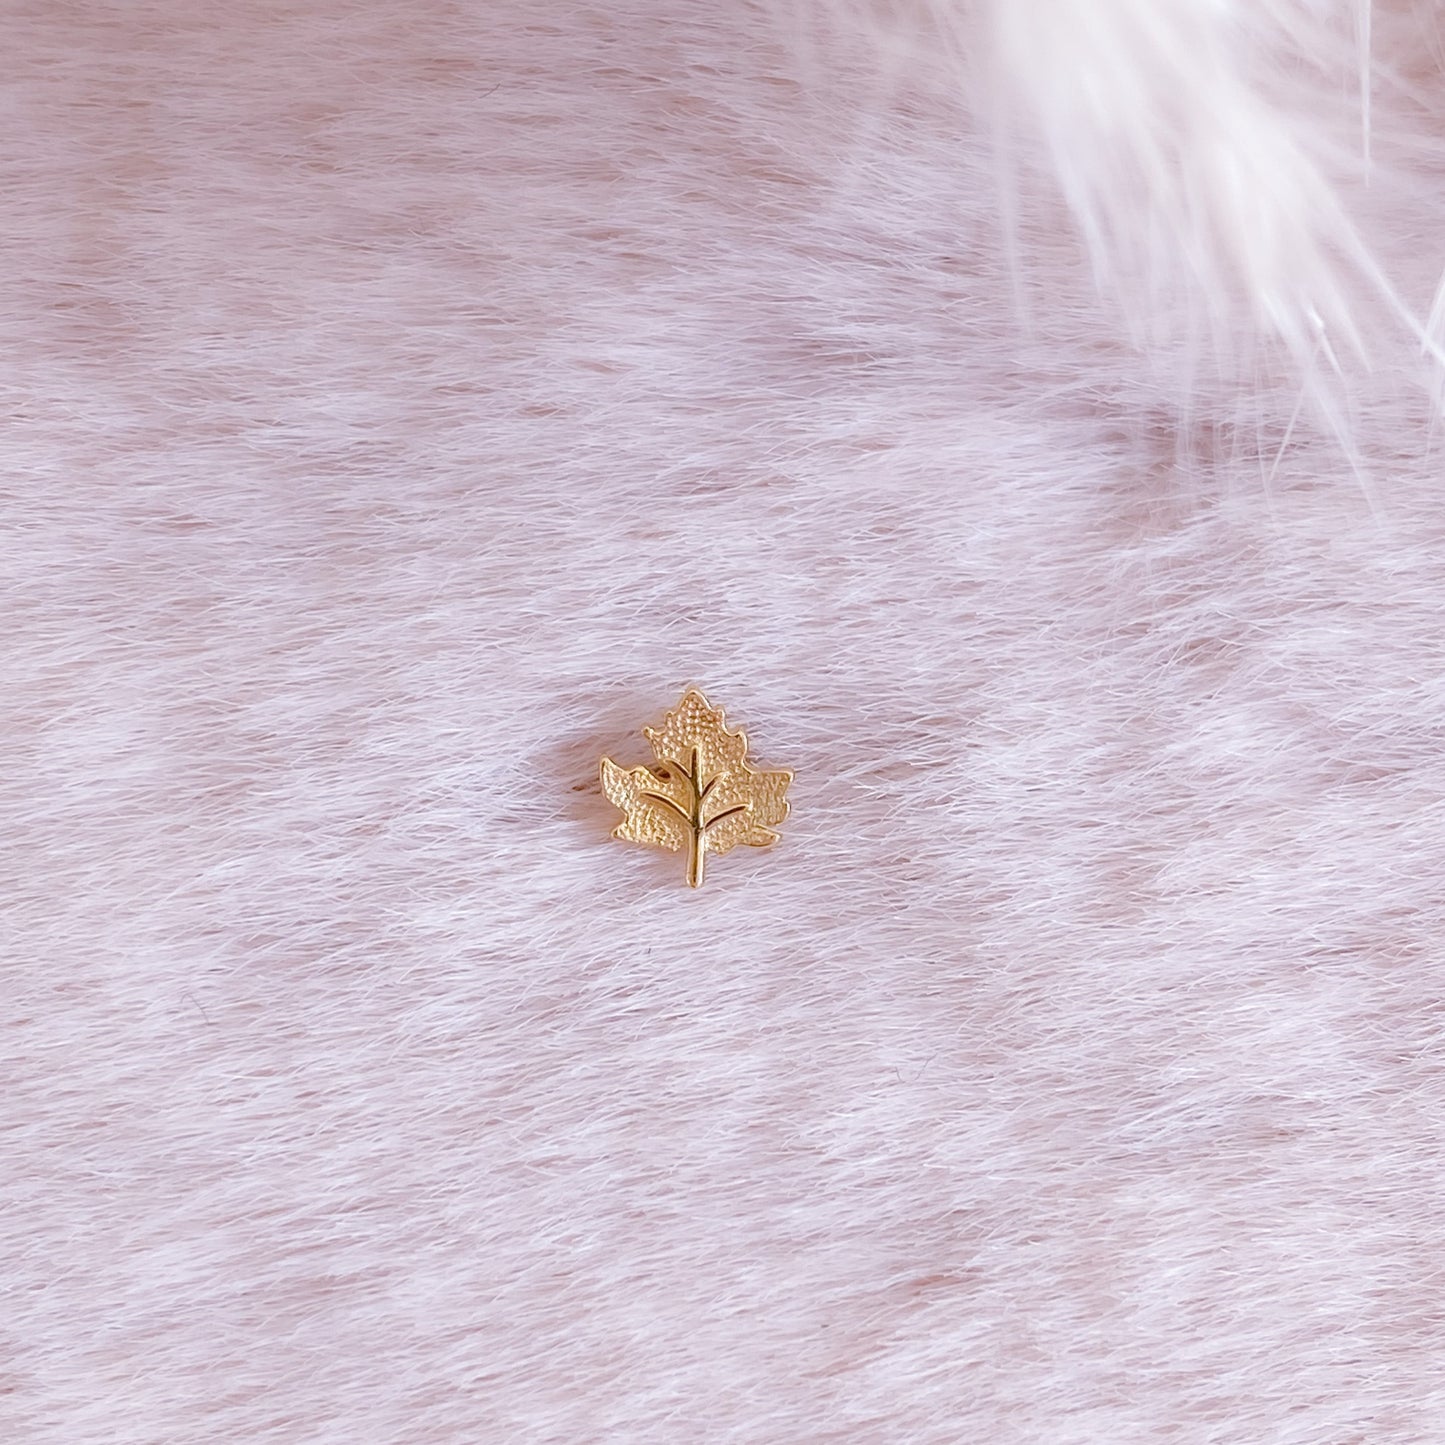 Tiny Maple Leaf Piercing